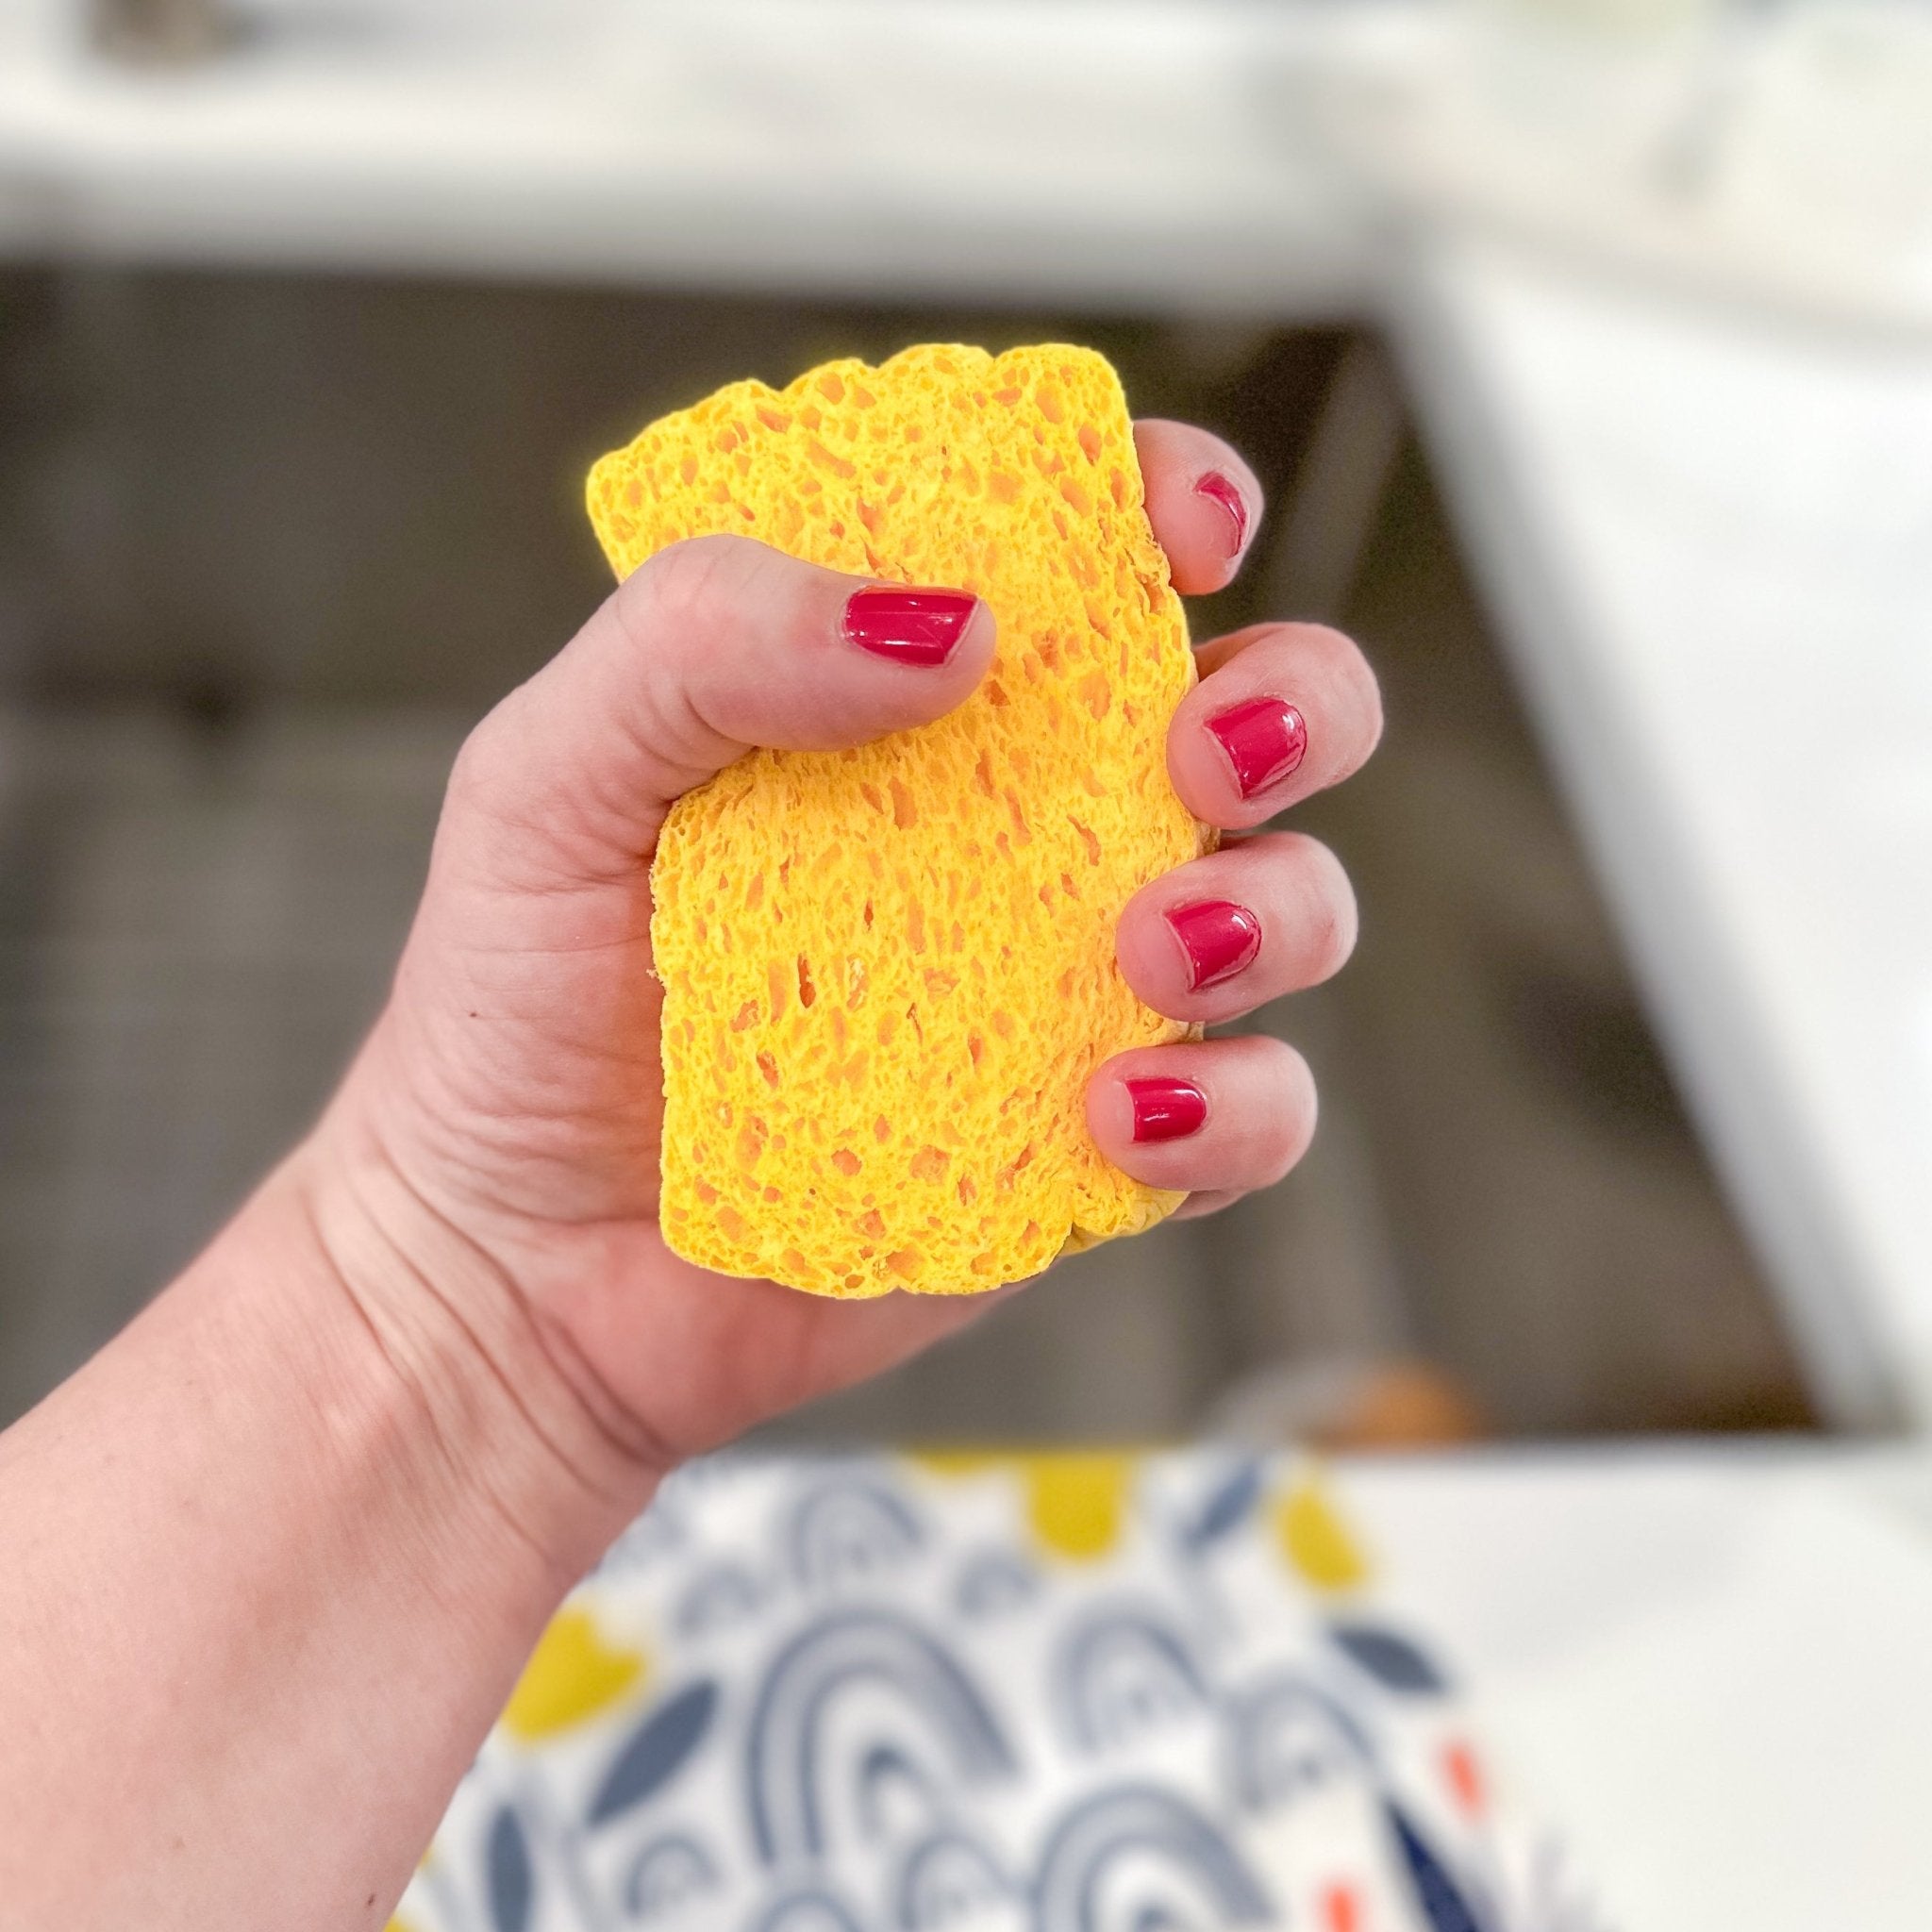 Biodegradable Cellulose Compressed Sponges - Kitchen Sponges for